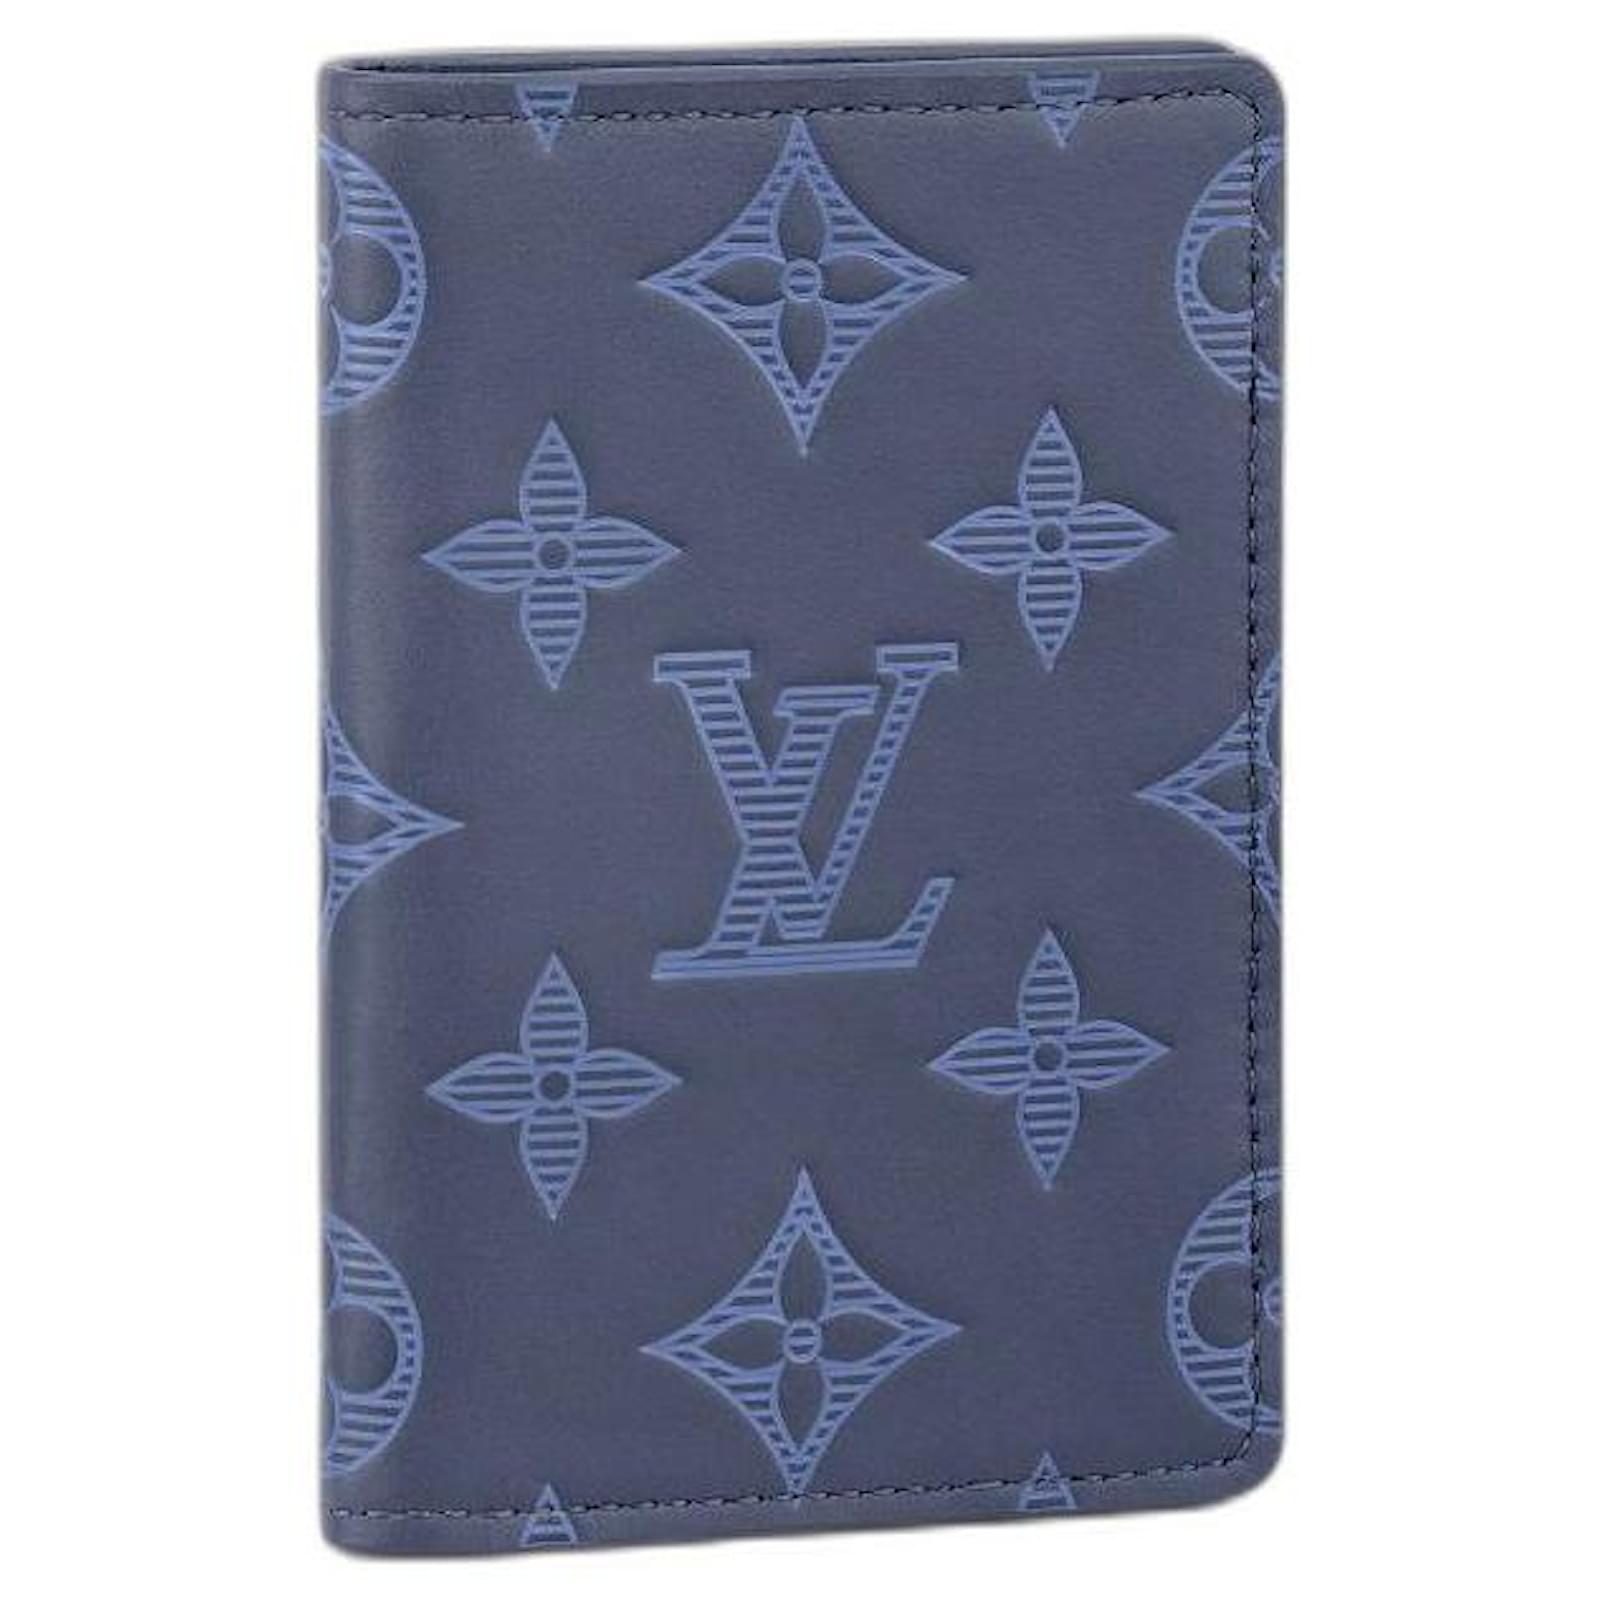 Wallets Small Accessories Louis Vuitton LV Pocket Organizer New Monogram Shadow